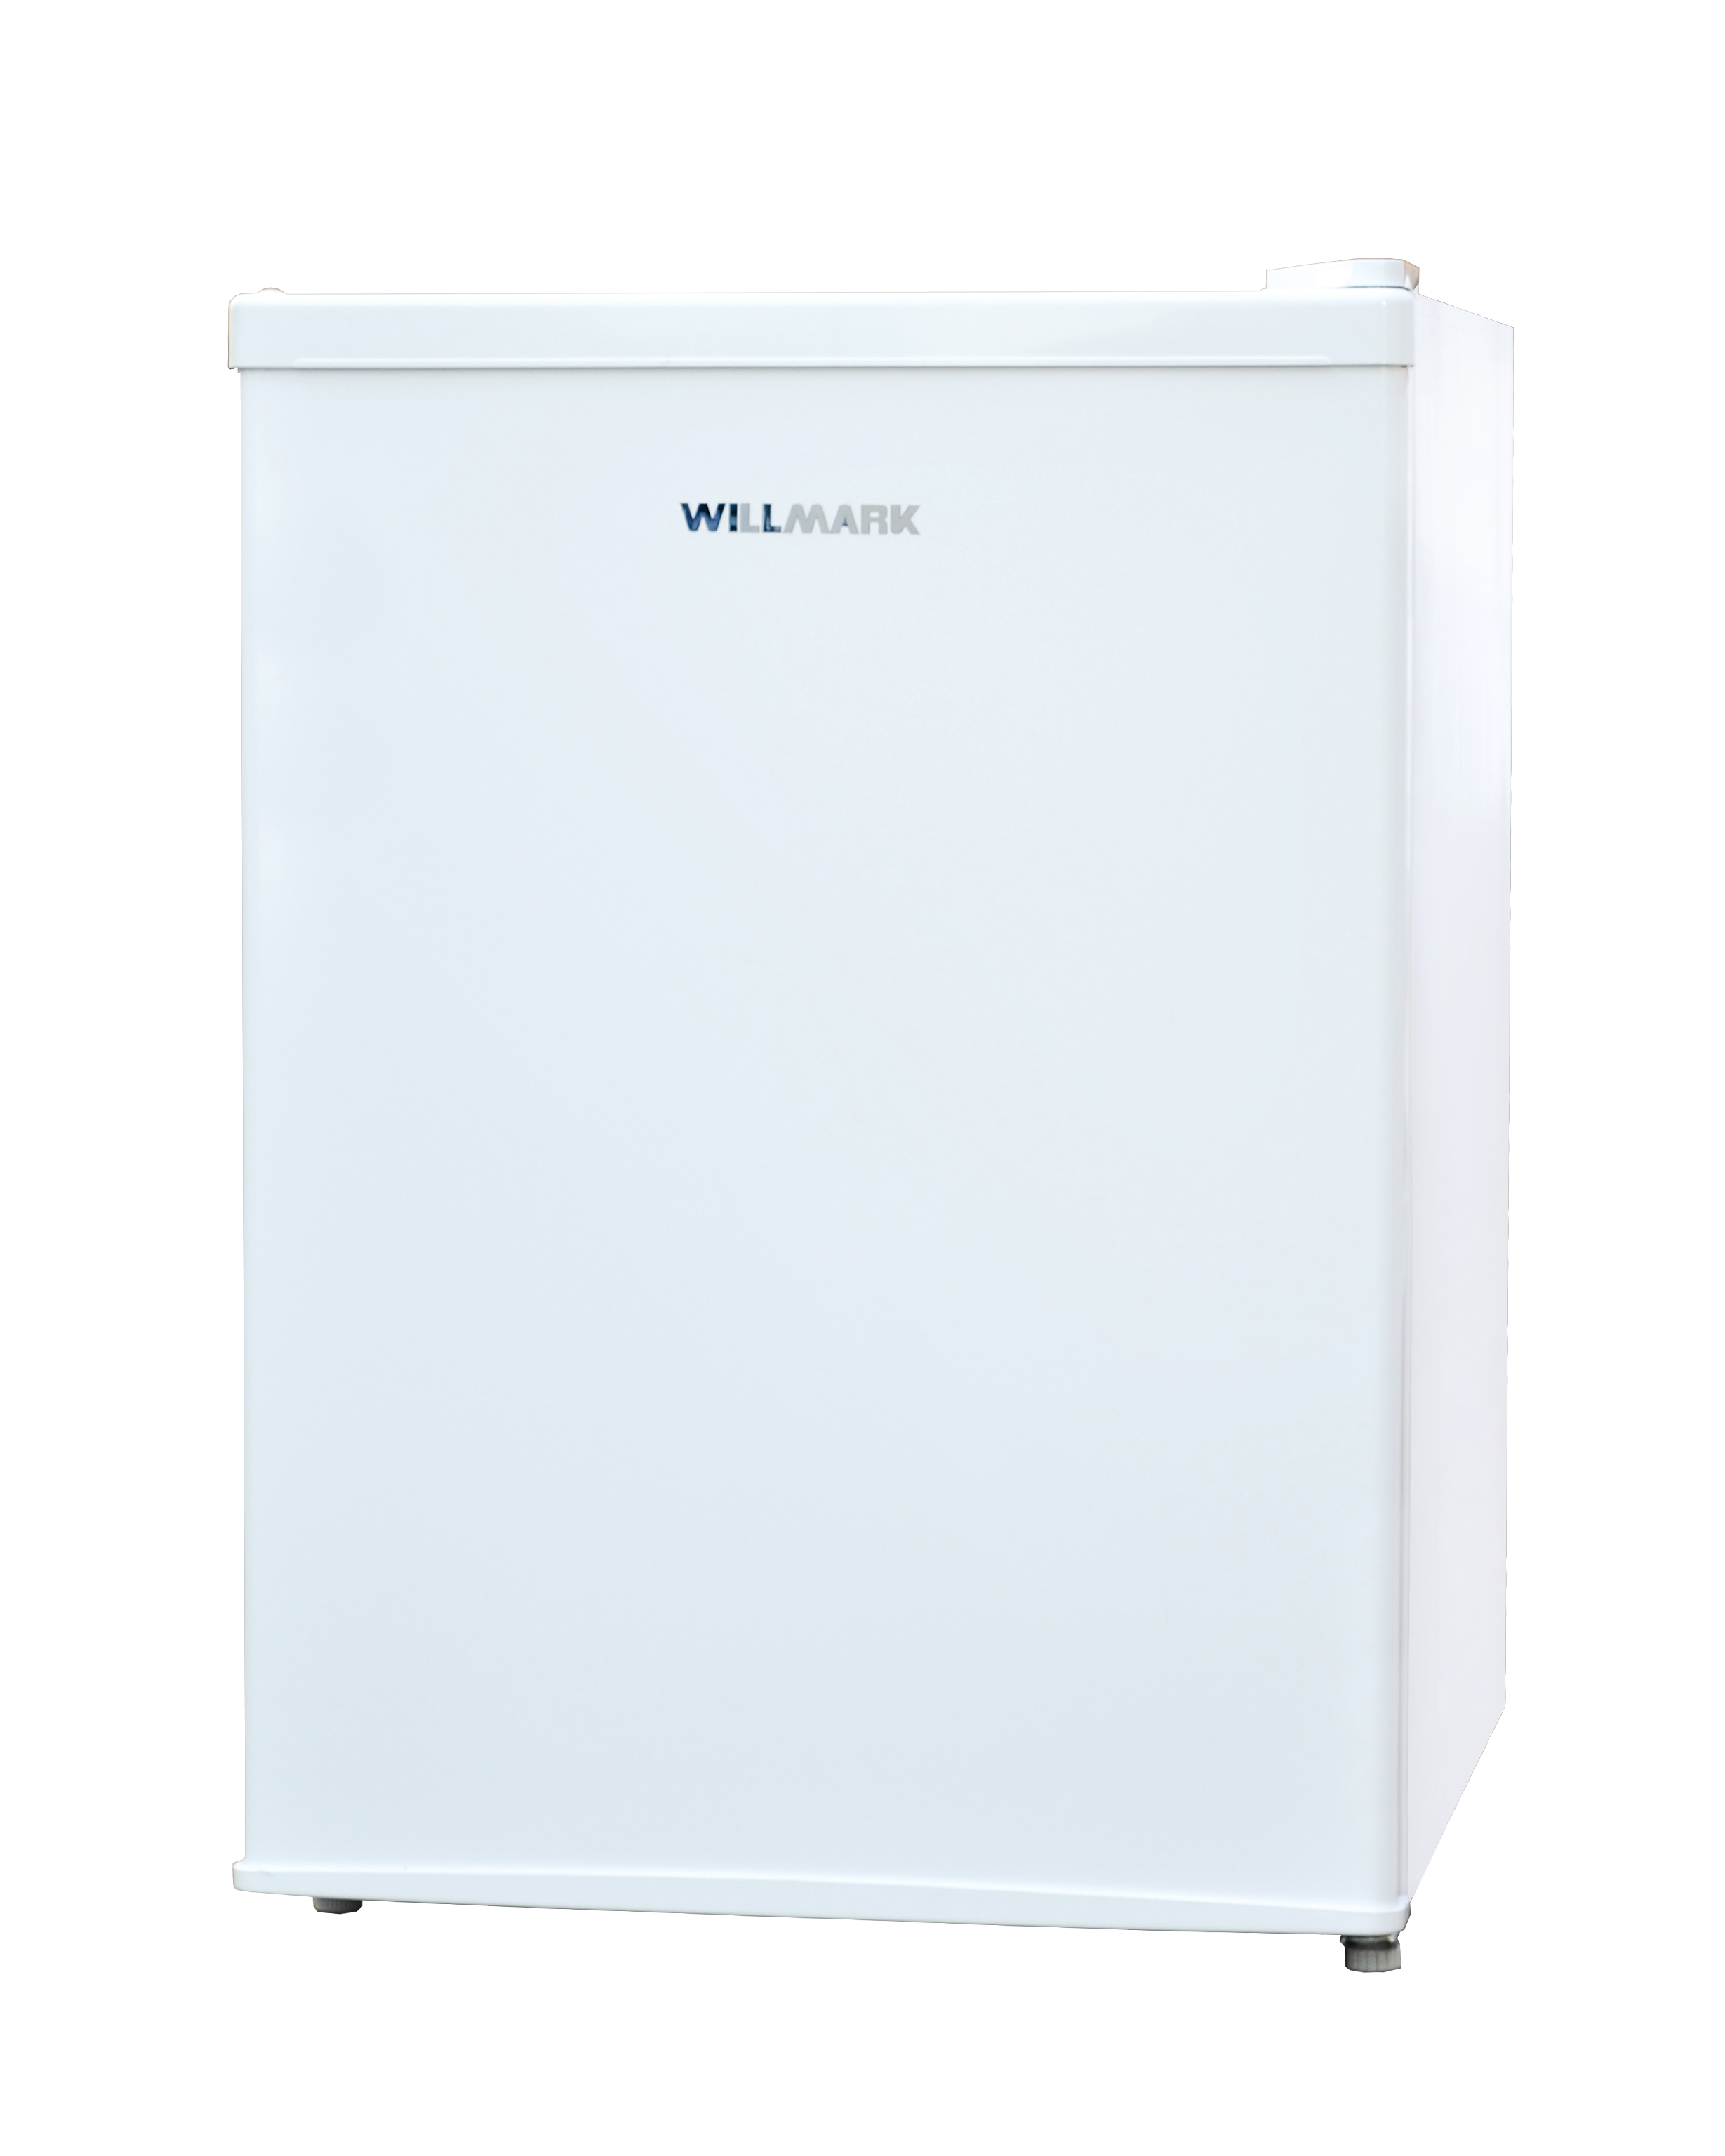 Холодильник WILLMARK RF-87W белый окно пластиковое пвх veka глухое 870x600 мм вxш однокамерный стеклопакет белый белый